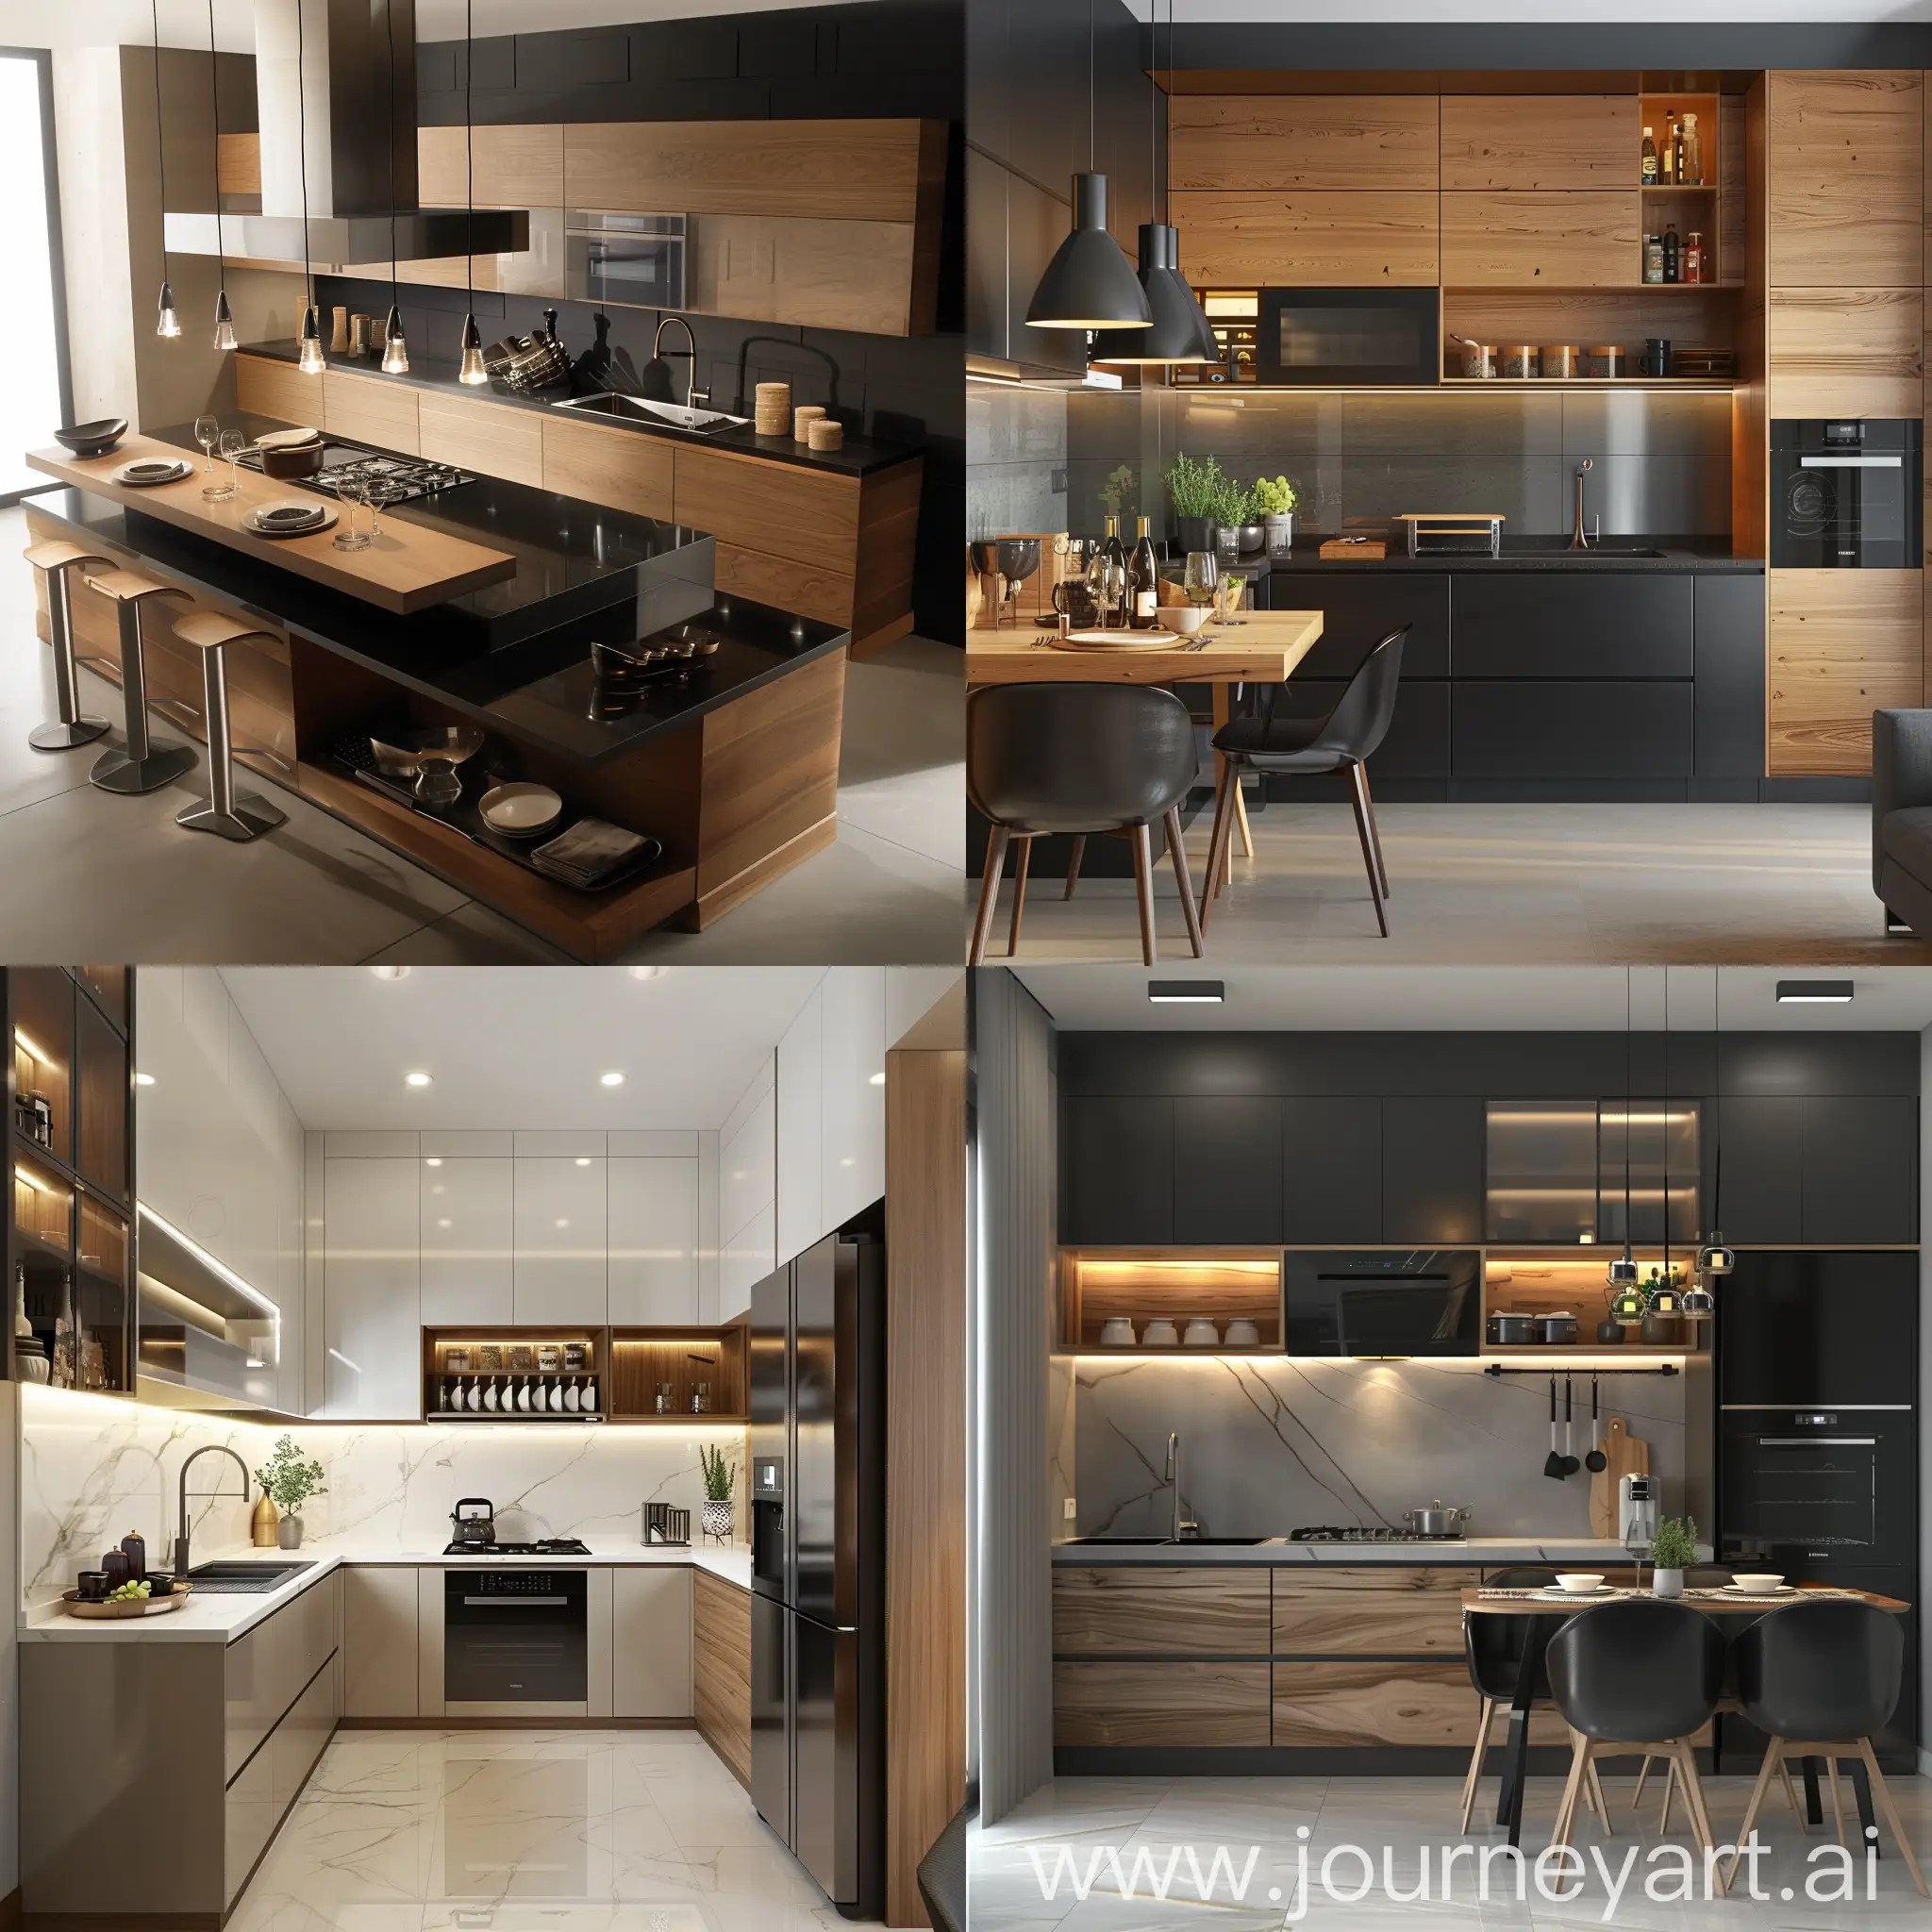 Luxury-Modern-Kitchen-Interior-with-Unique-Classy-Design-and-Elegant-Wood-Elements